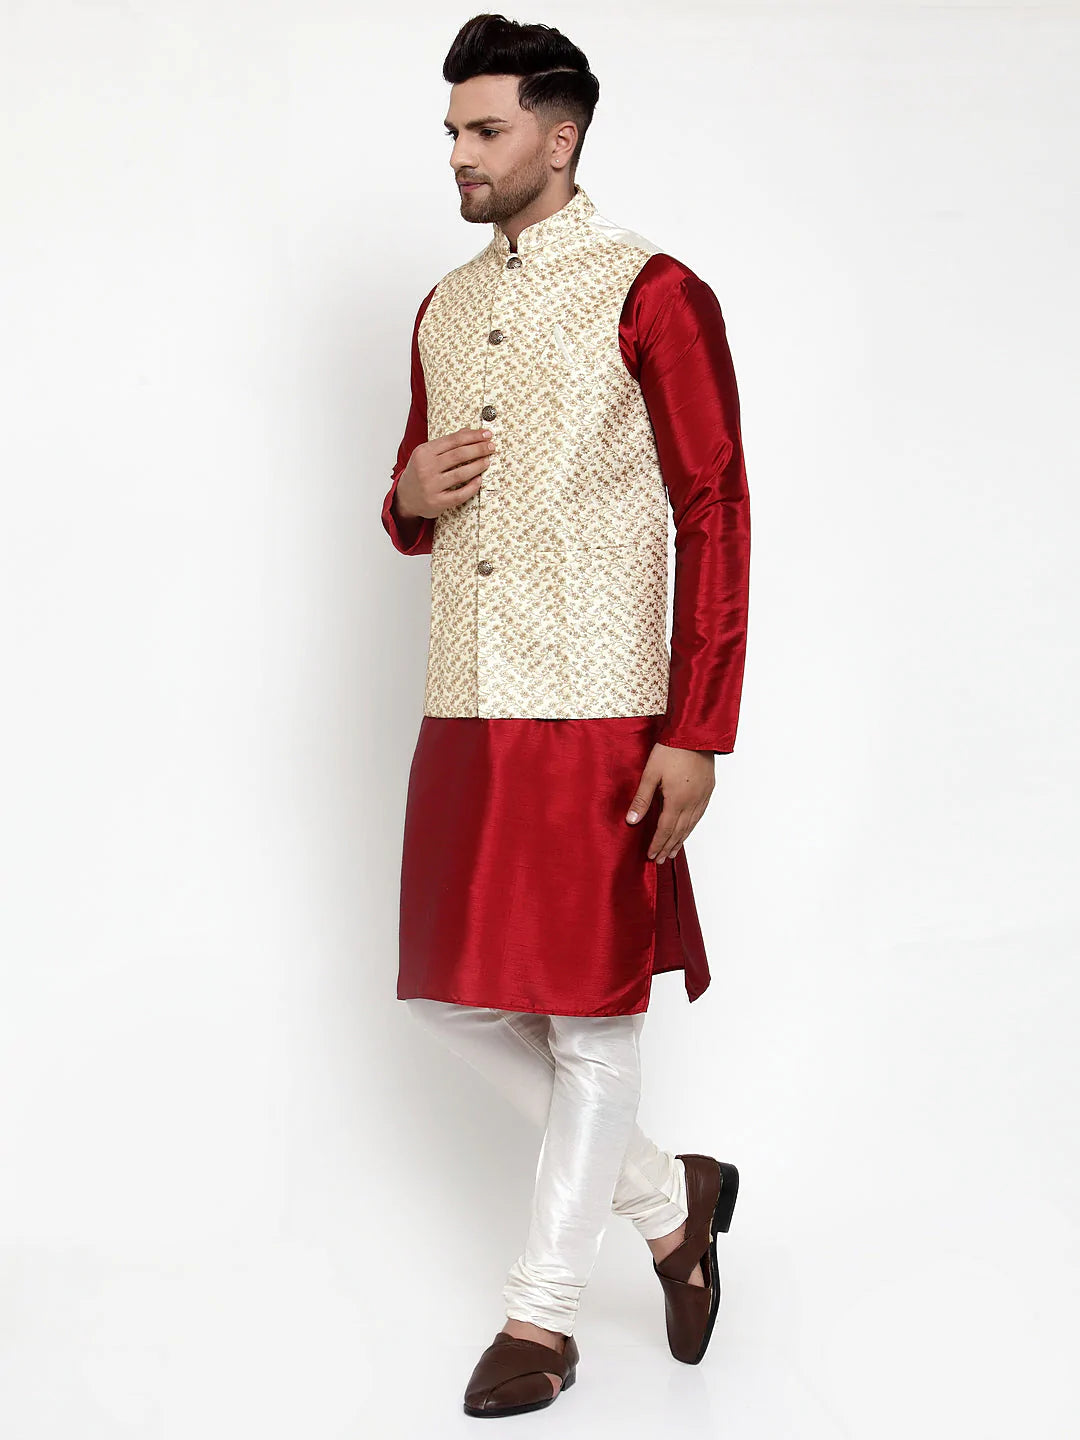 Jompers Men's Solid Dupion Kurta Pajama with Embroidered Nehru Jacket ( JOKPWC M-D 4016Cream )